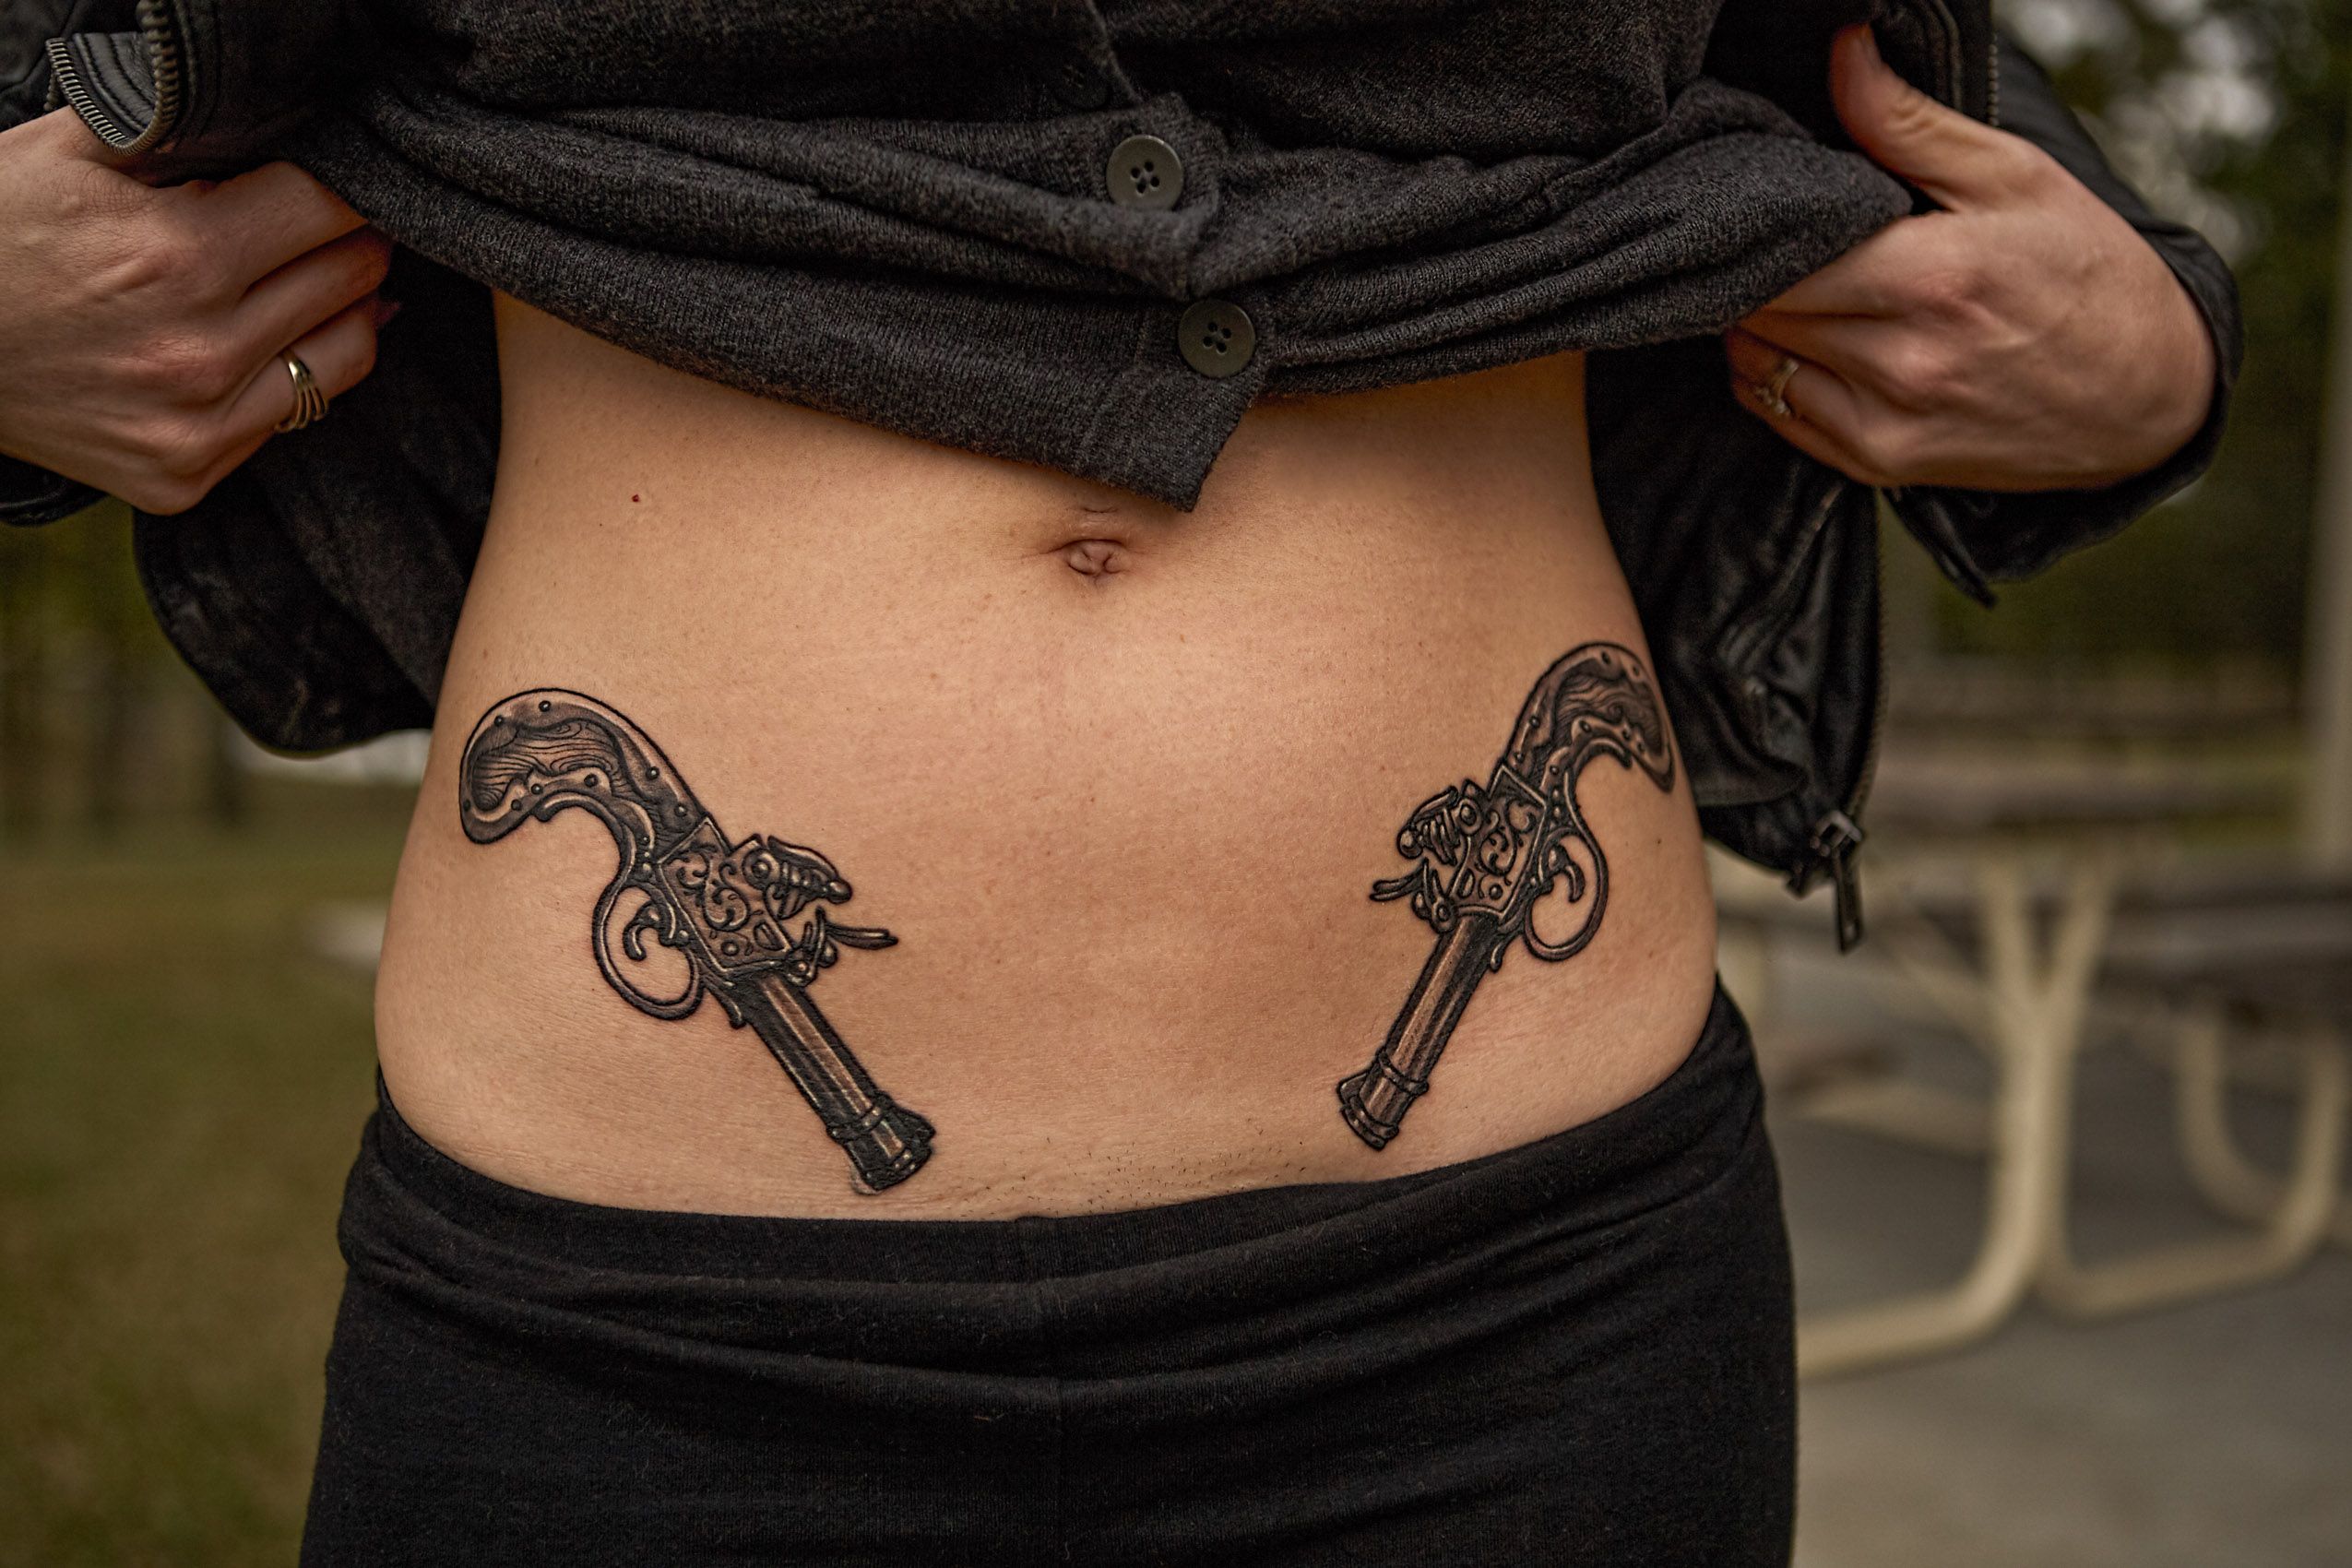 Woman with Gun Tattoos